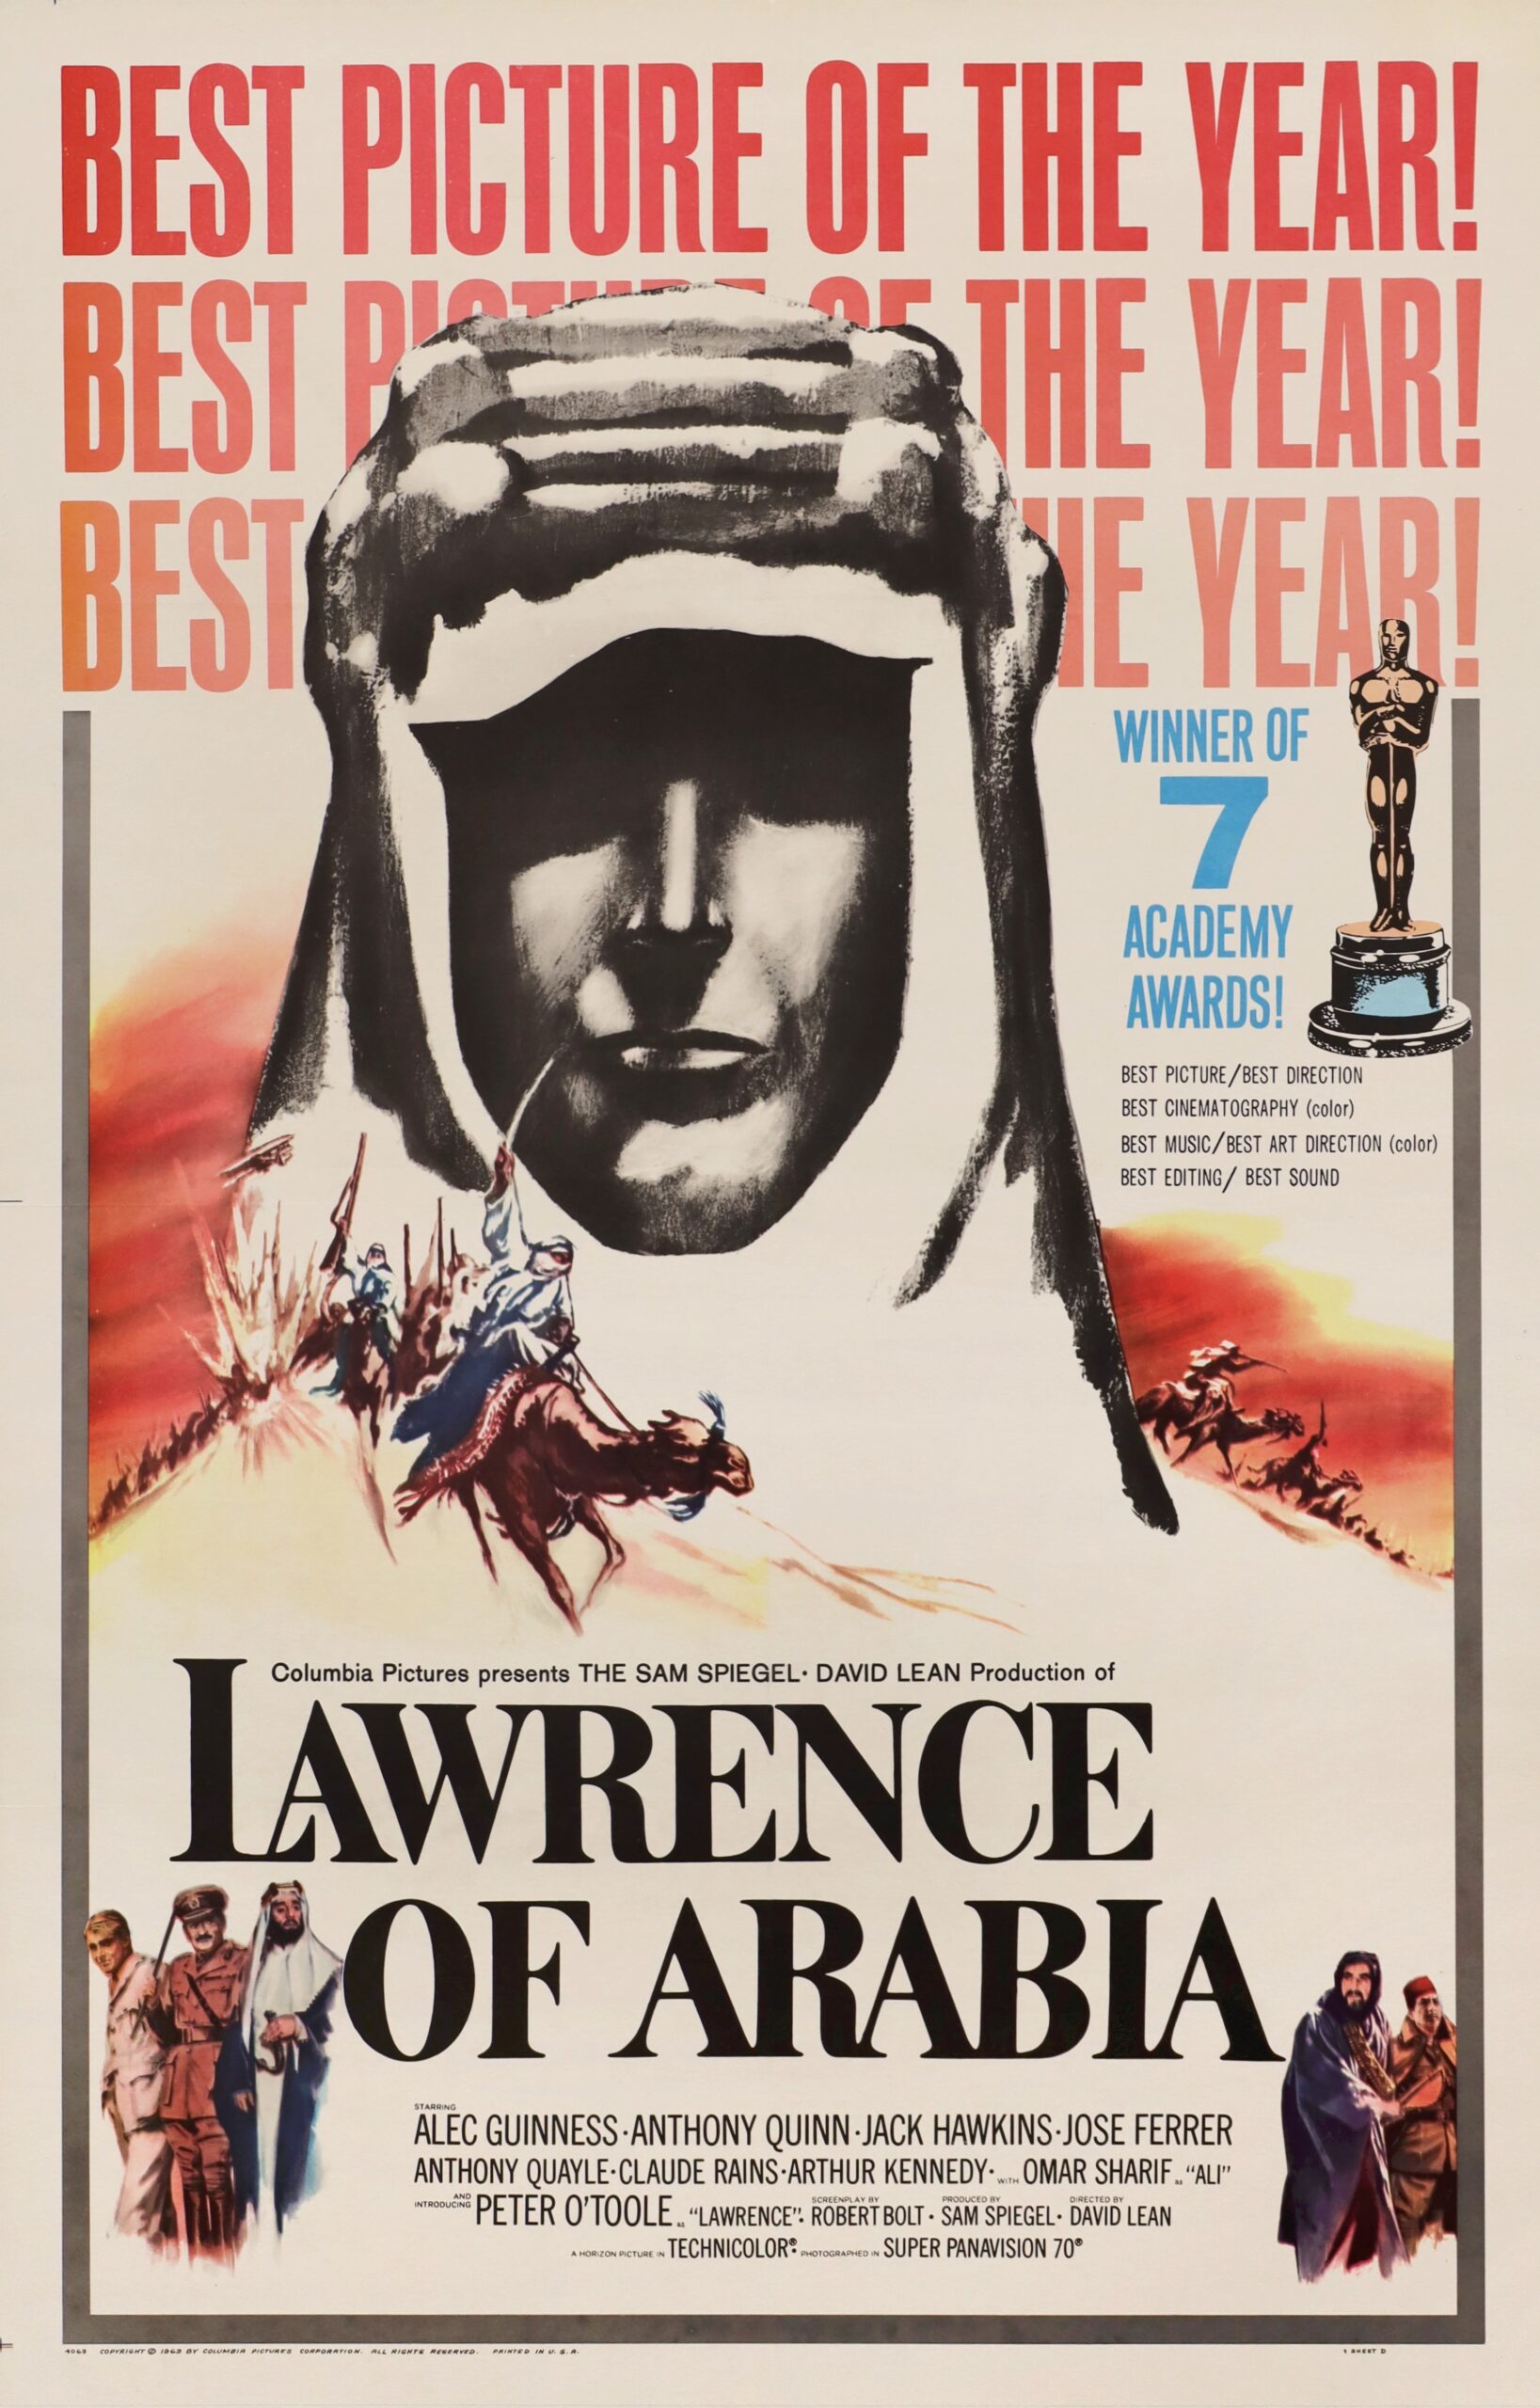 Original vintage cinema movie poster for David Lean's Lawrence of Arabia